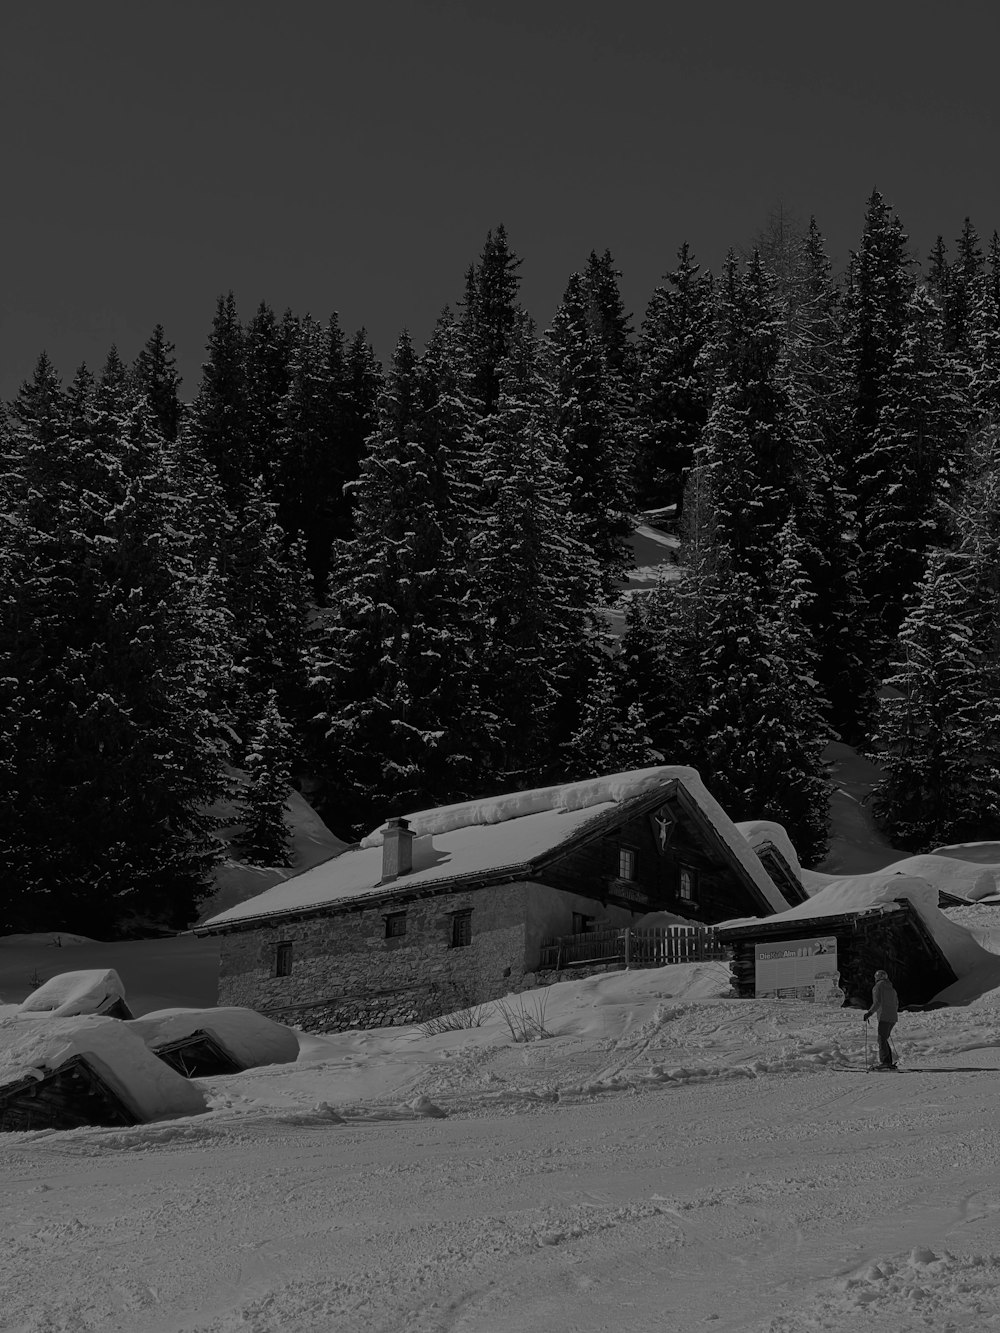 a black and white photo of a ski lodge